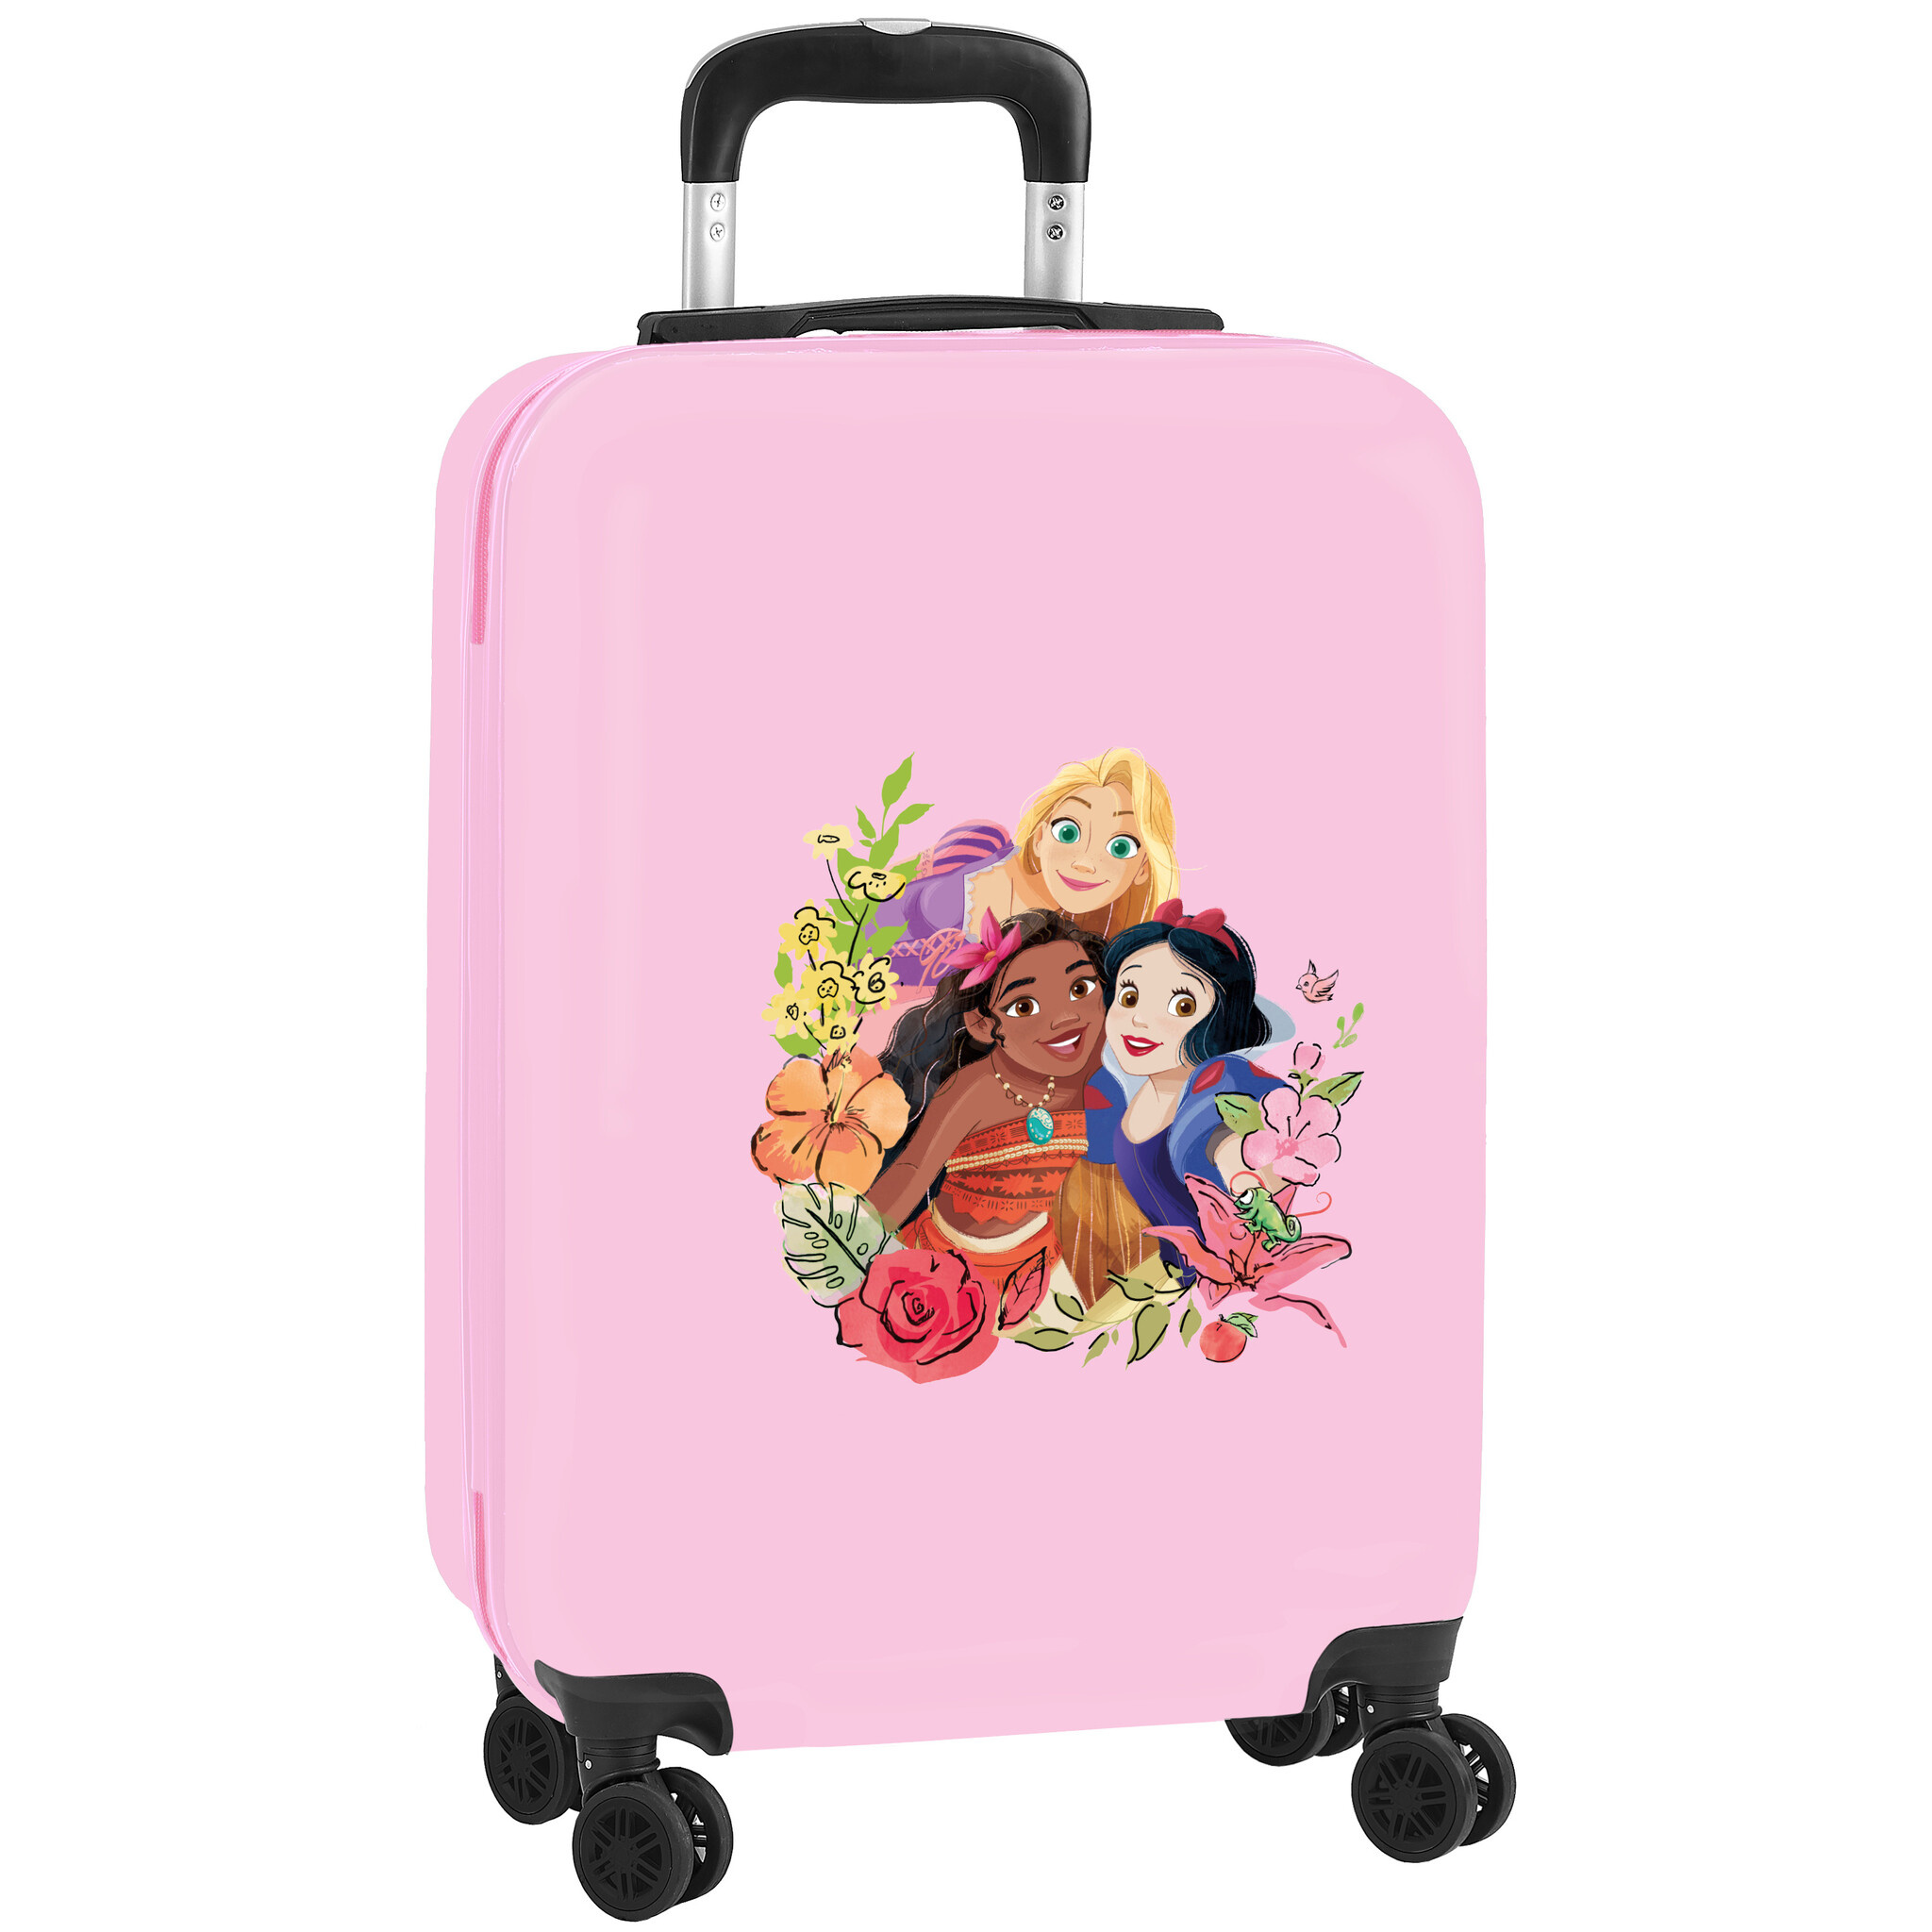 Disney Princess Trolley Magical - 55 x 34.5 x 20 cm - ABS hard case